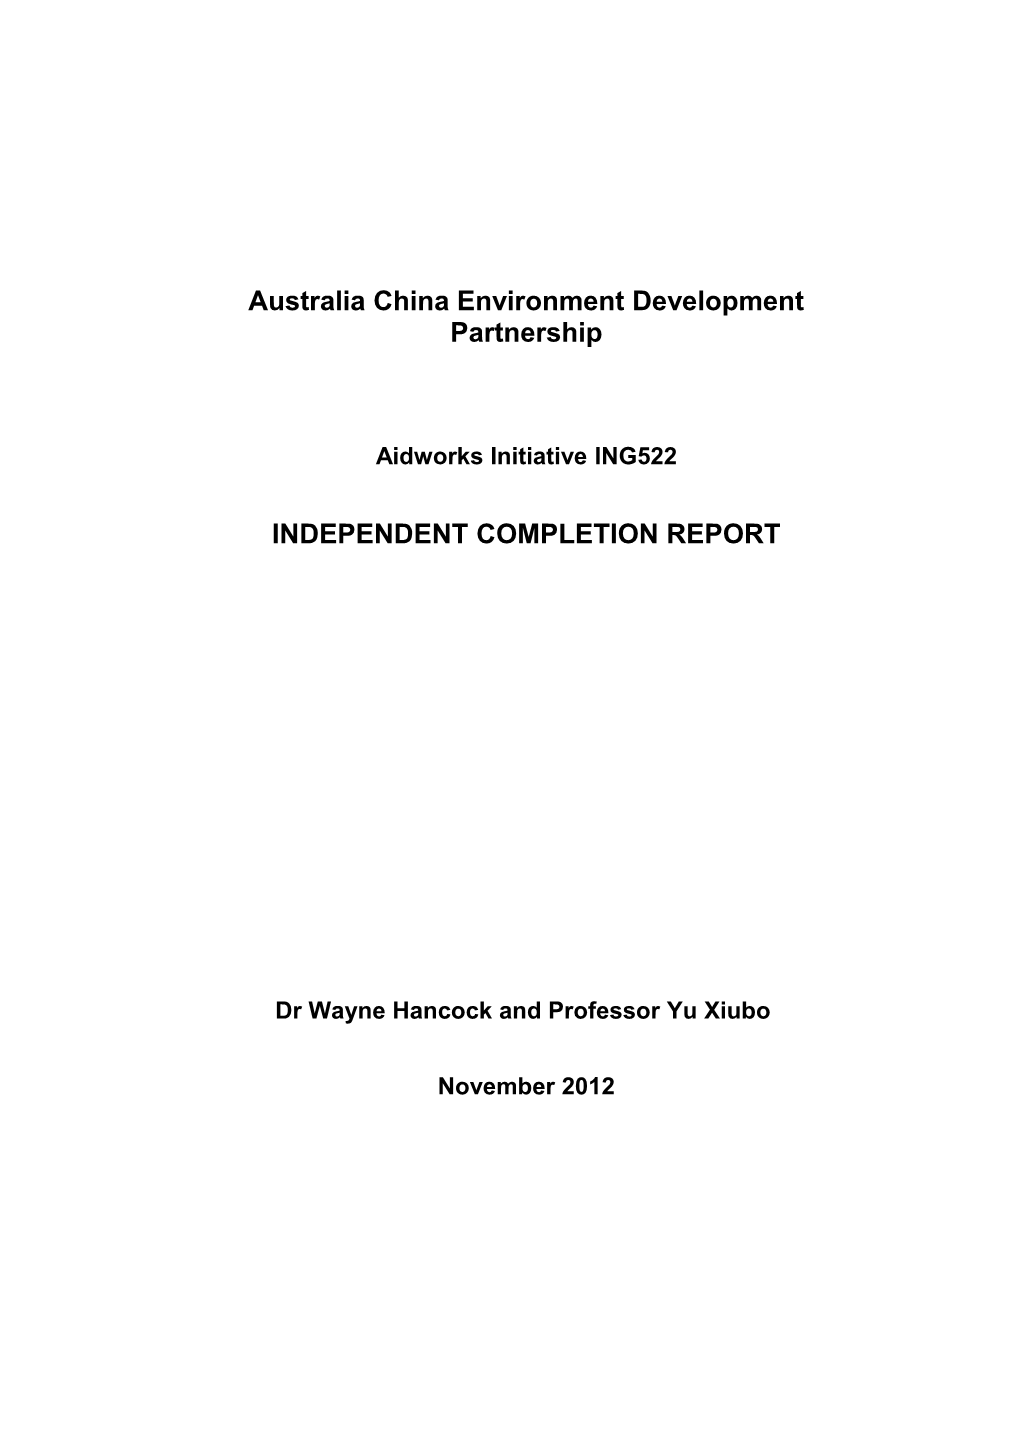 Australia China Environment Development Partnership